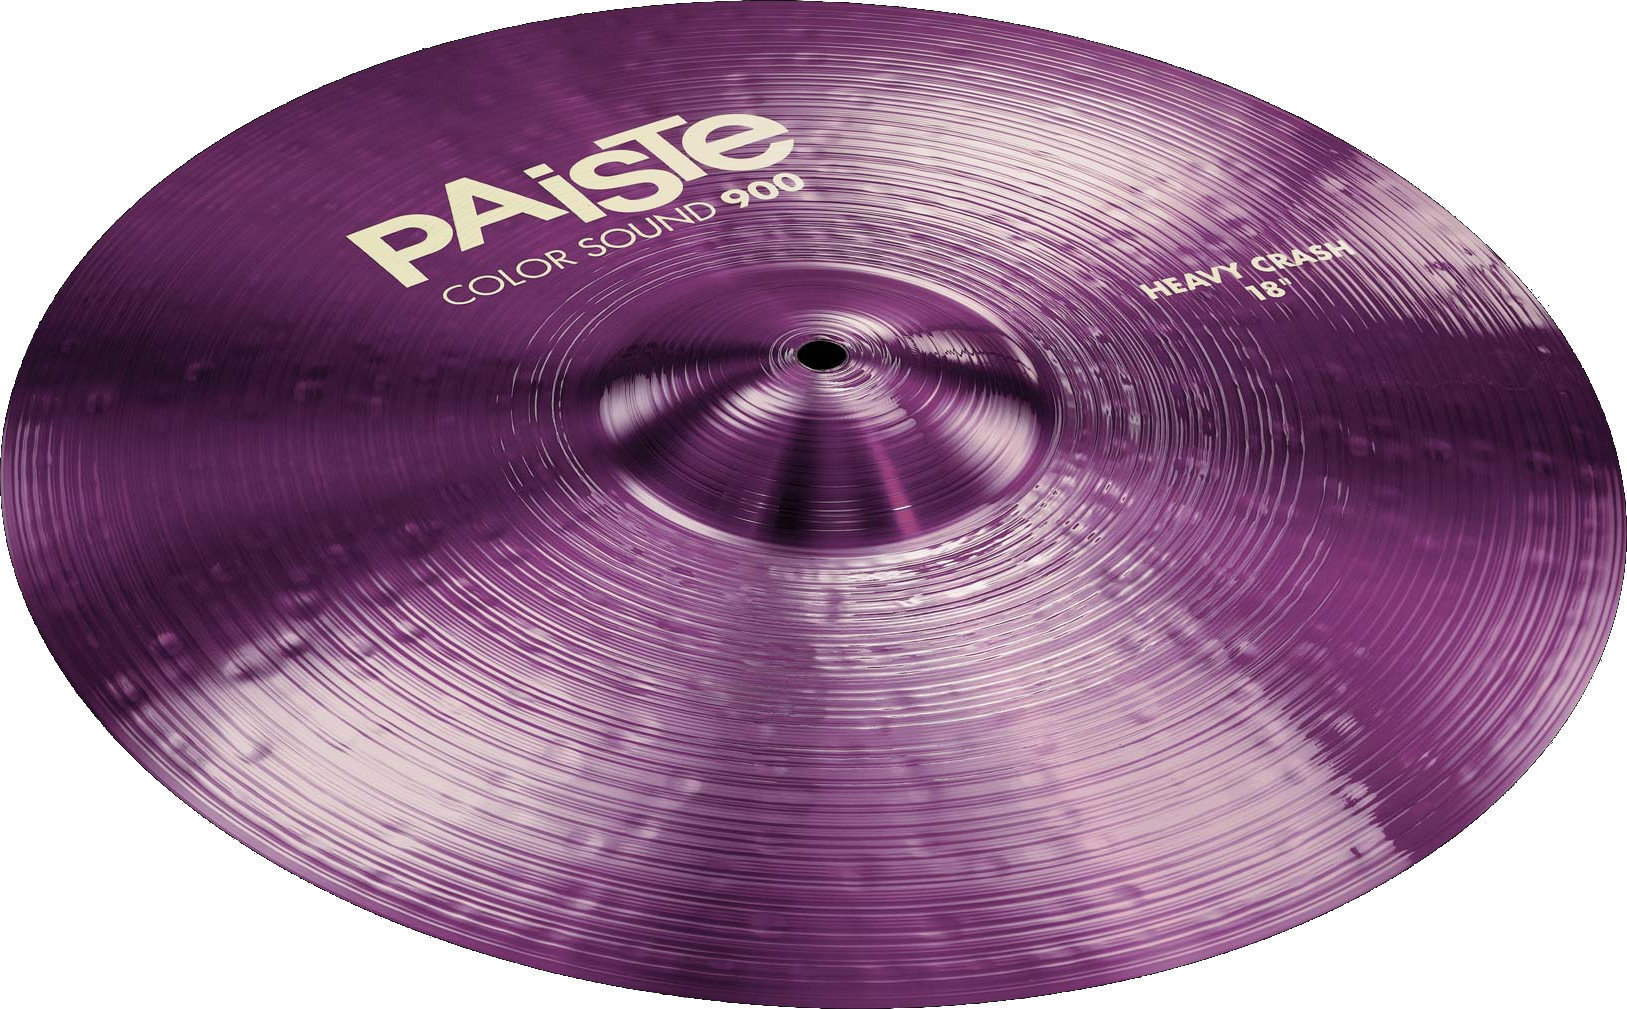 Crash Cymbal Paiste Color Sound 900  Heavy Crash Cymbal 16" Violett